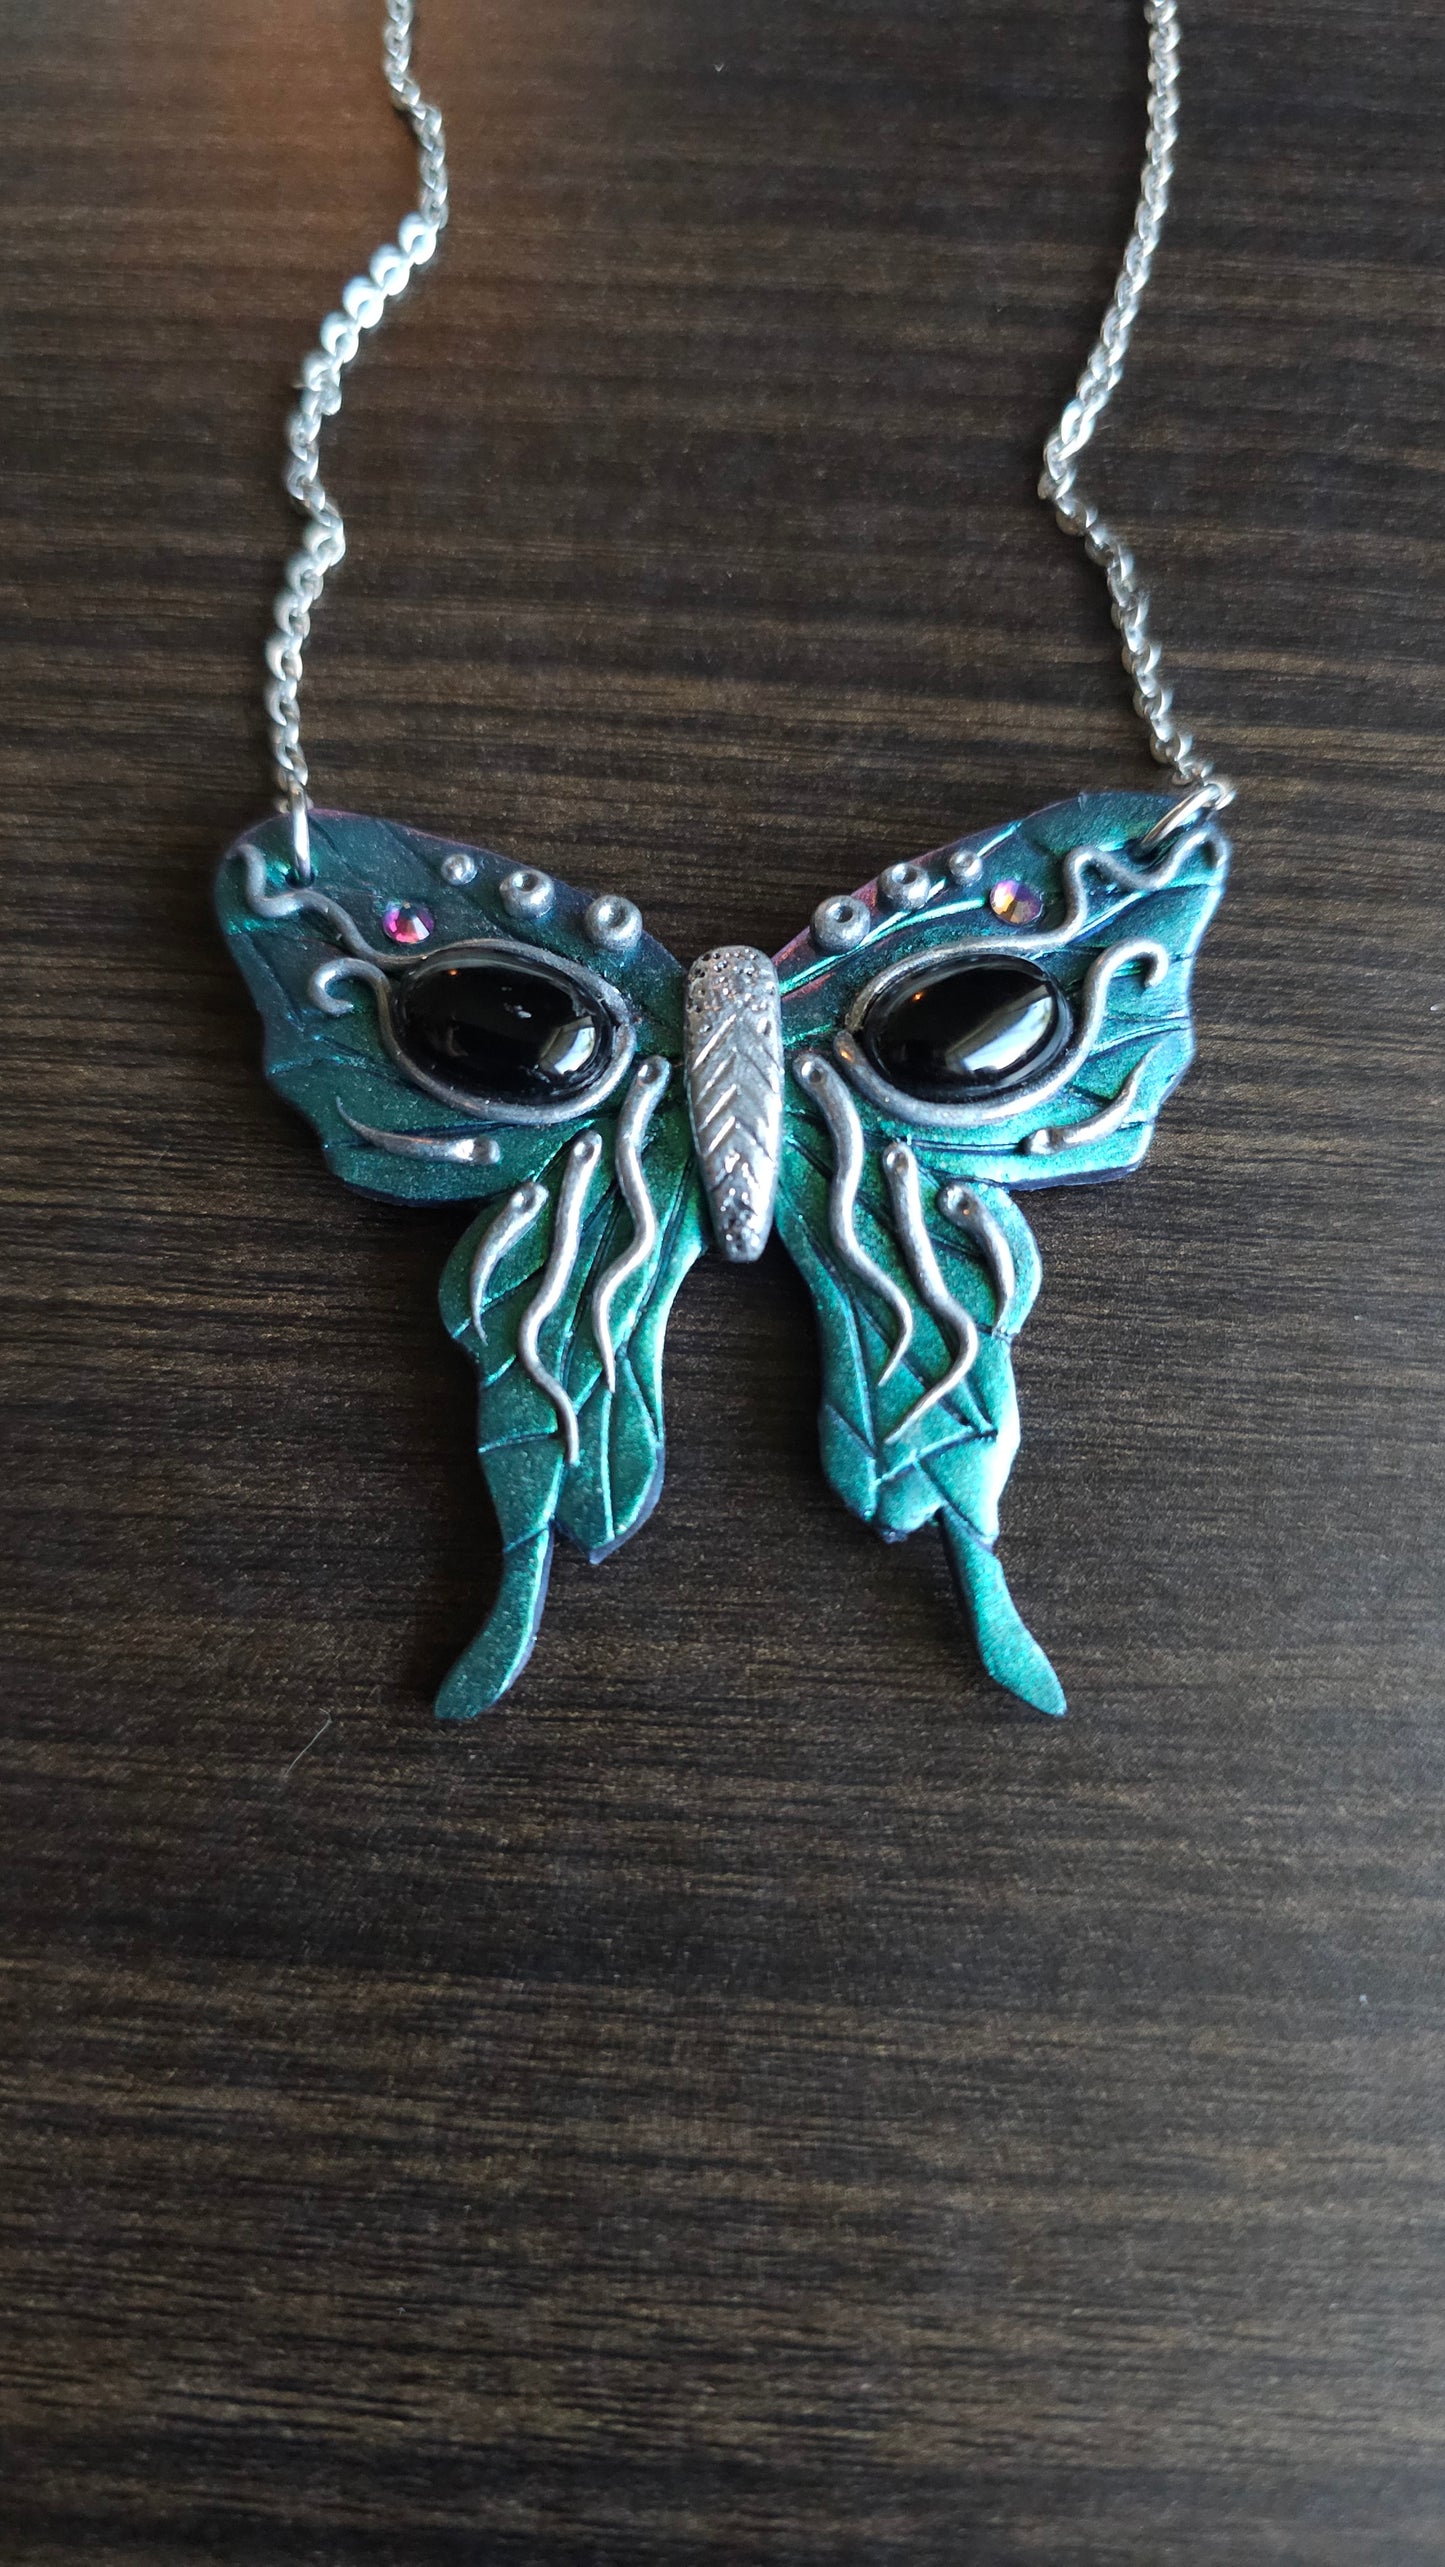 Obsidian butterfly necklace